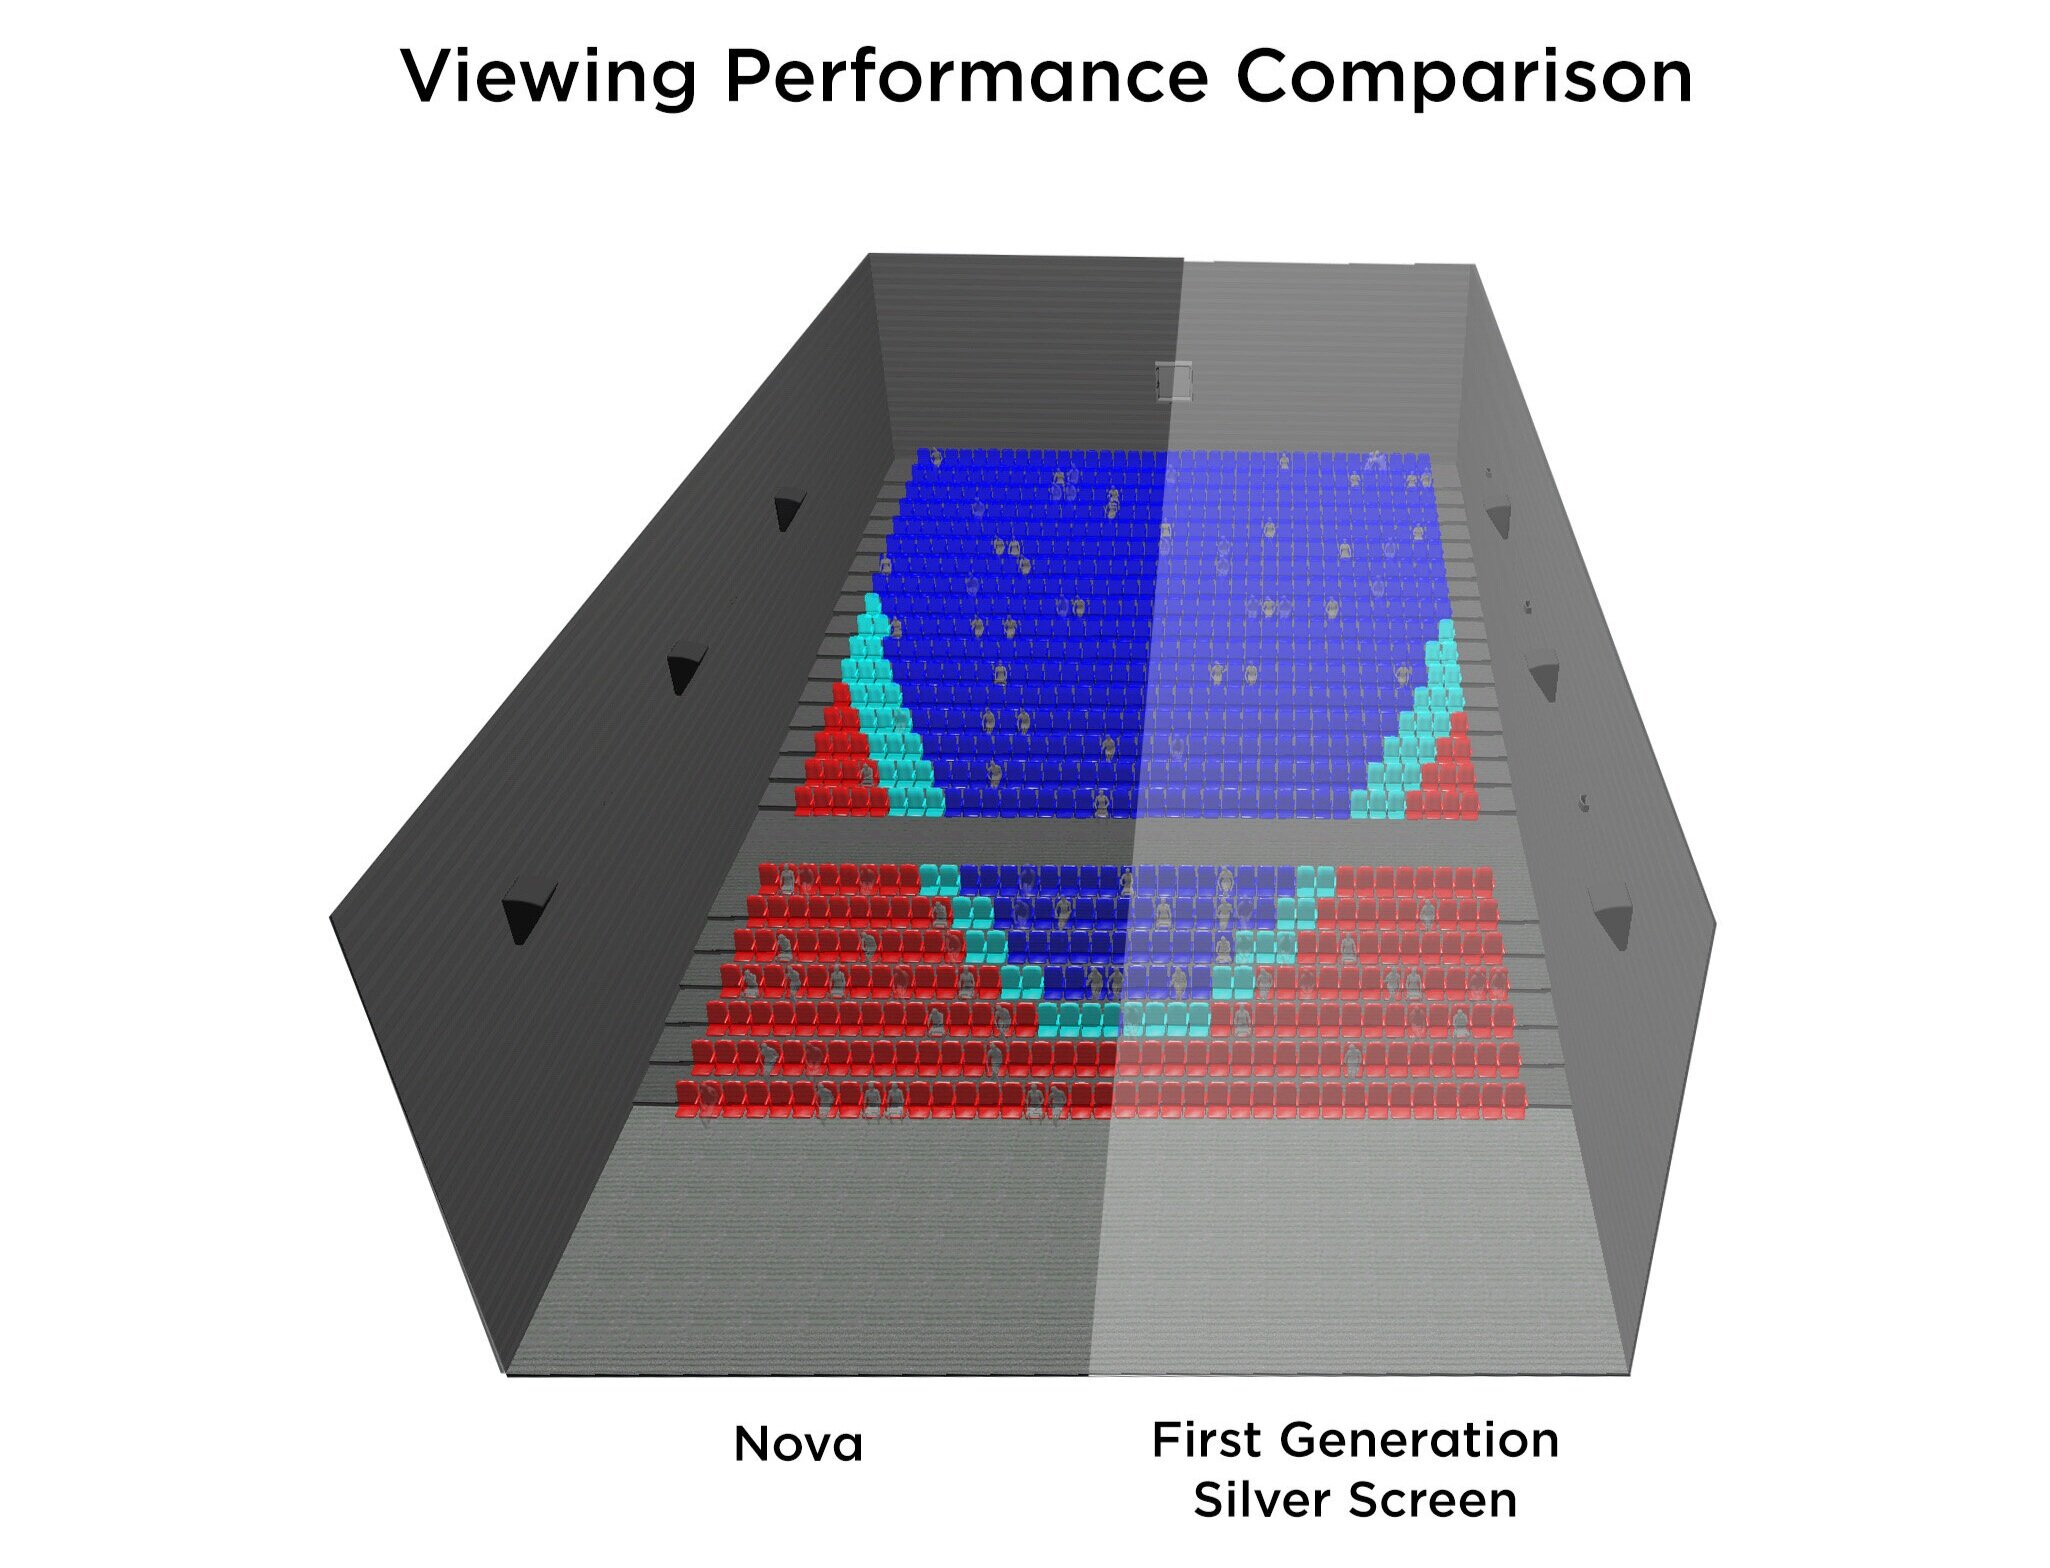 nova_viewing_performance_comparison.jpg